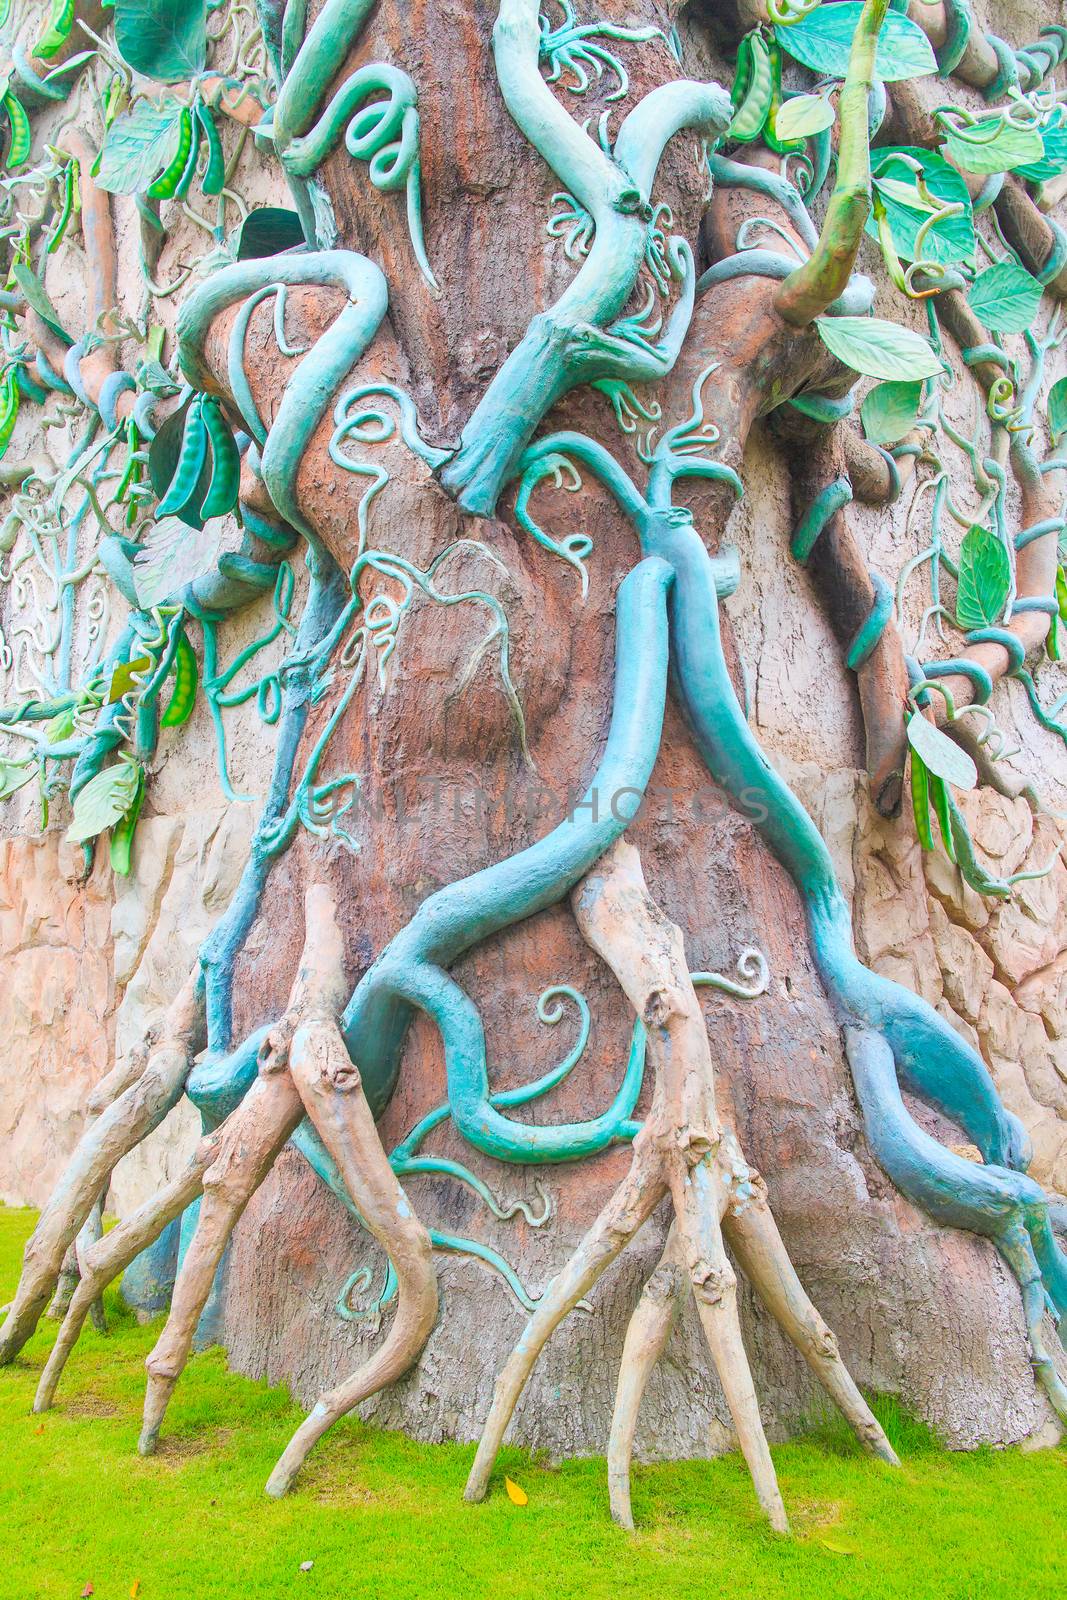 Giant beanstalk ivy plants on the fake tree.